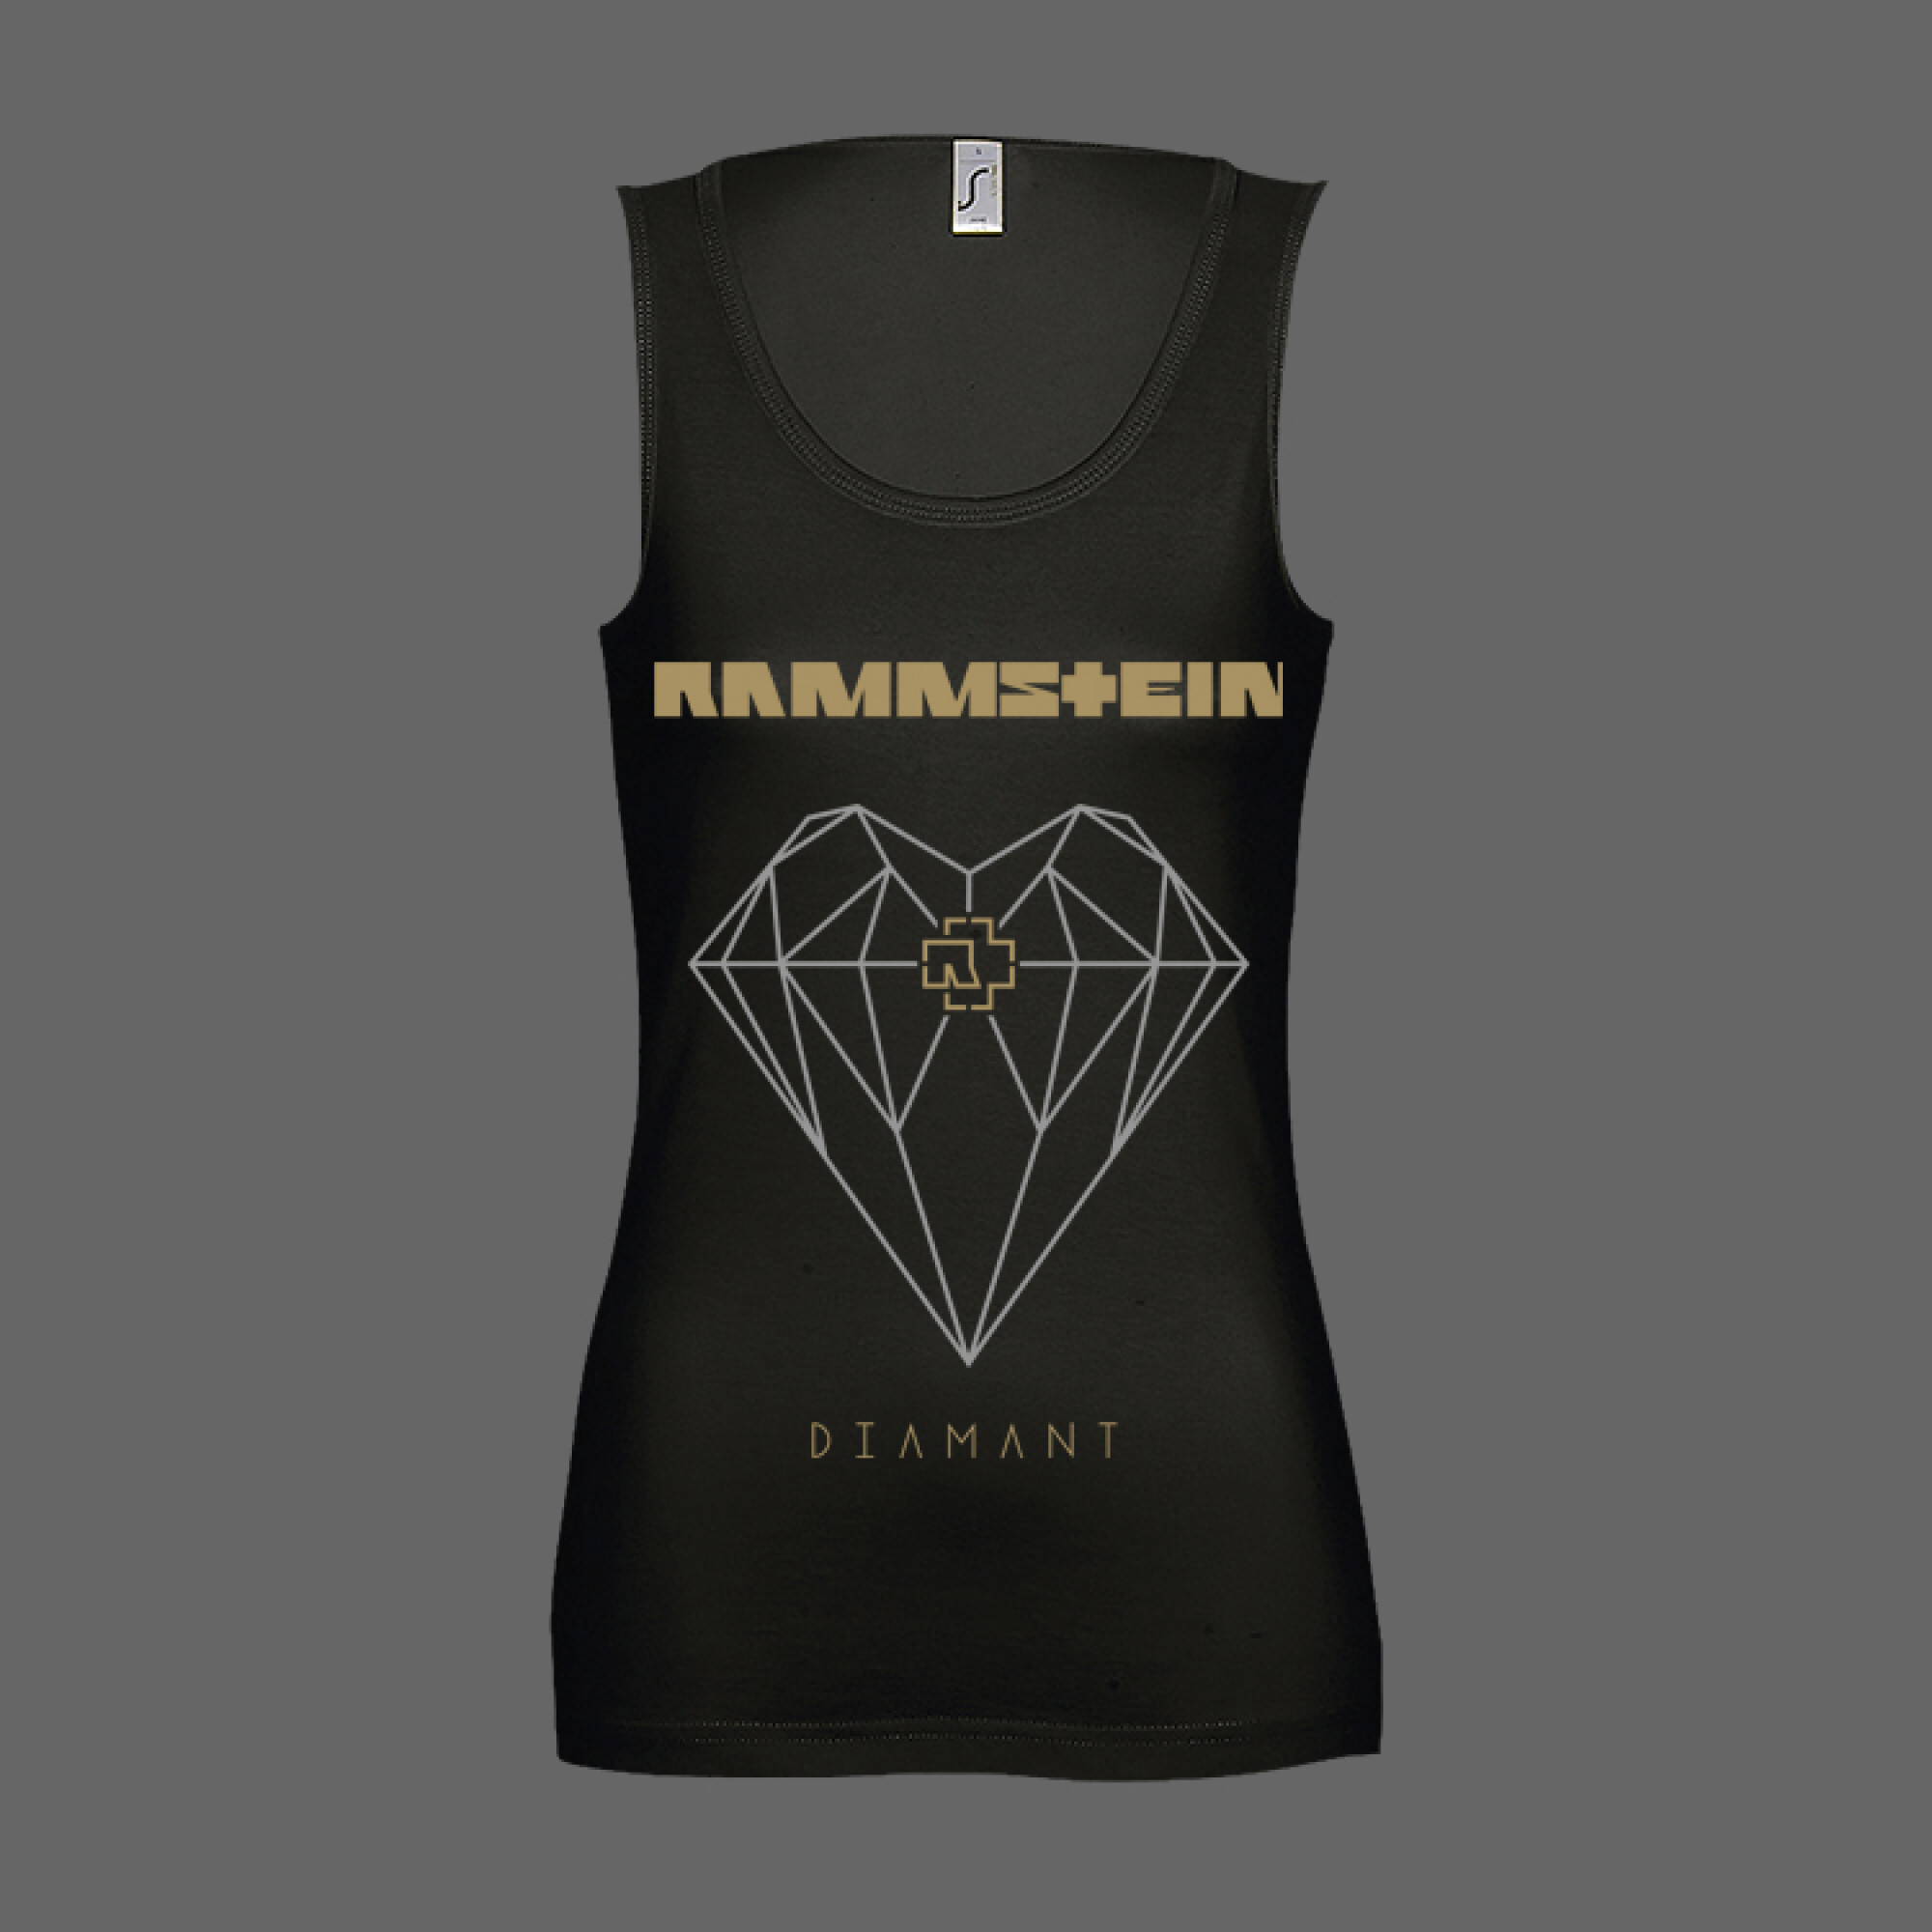 Tank top ”Diamant” | Rammstein-Shop